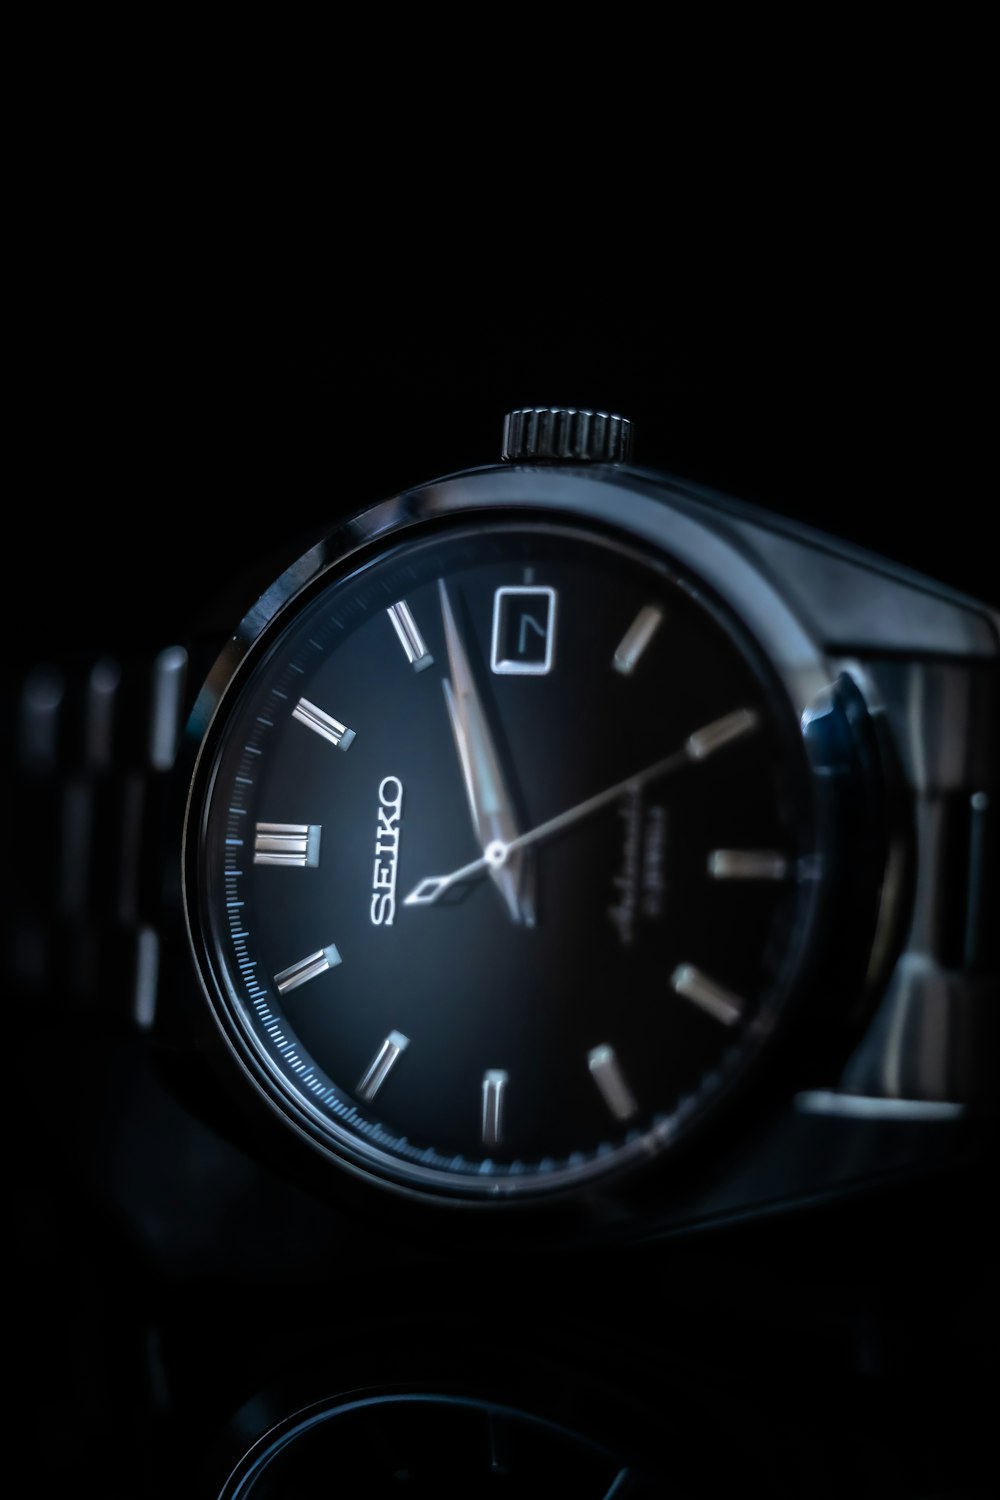 Silver and black analog watch photo – Free Product Image on Unsplash